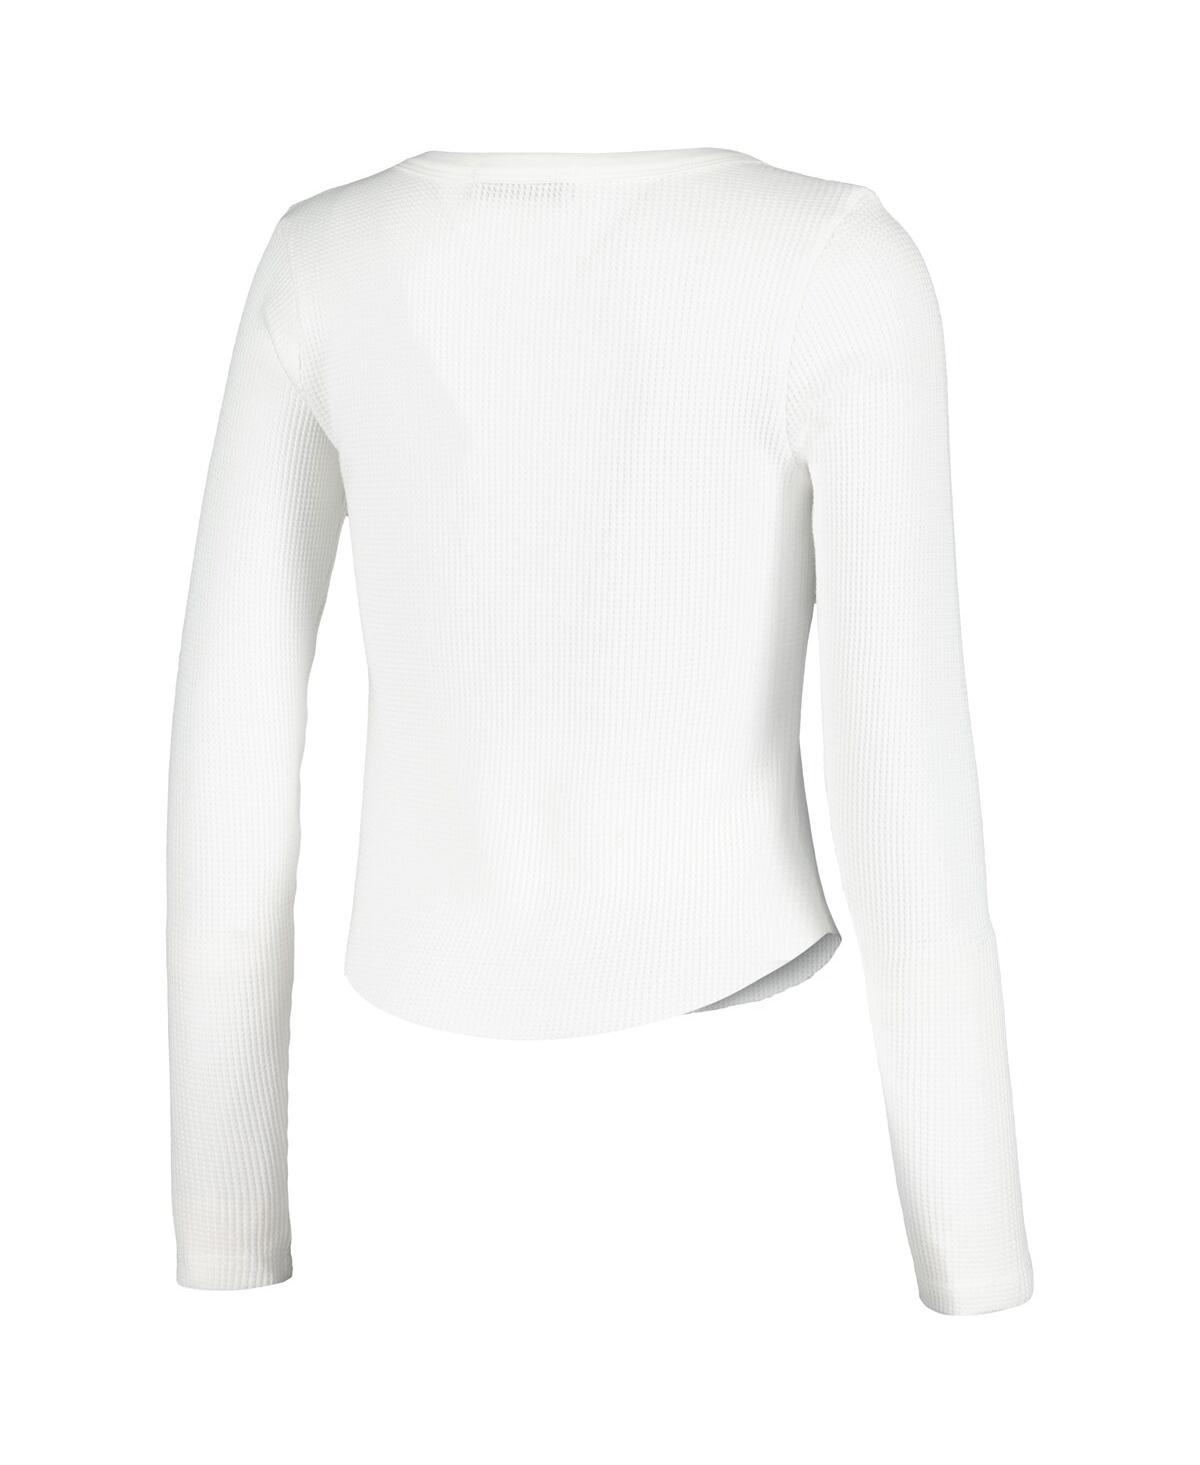 Shop Daydreamer Women's  White Stevie Nicks Bella Donna Raw Thermal Long Sleeve T-shirt